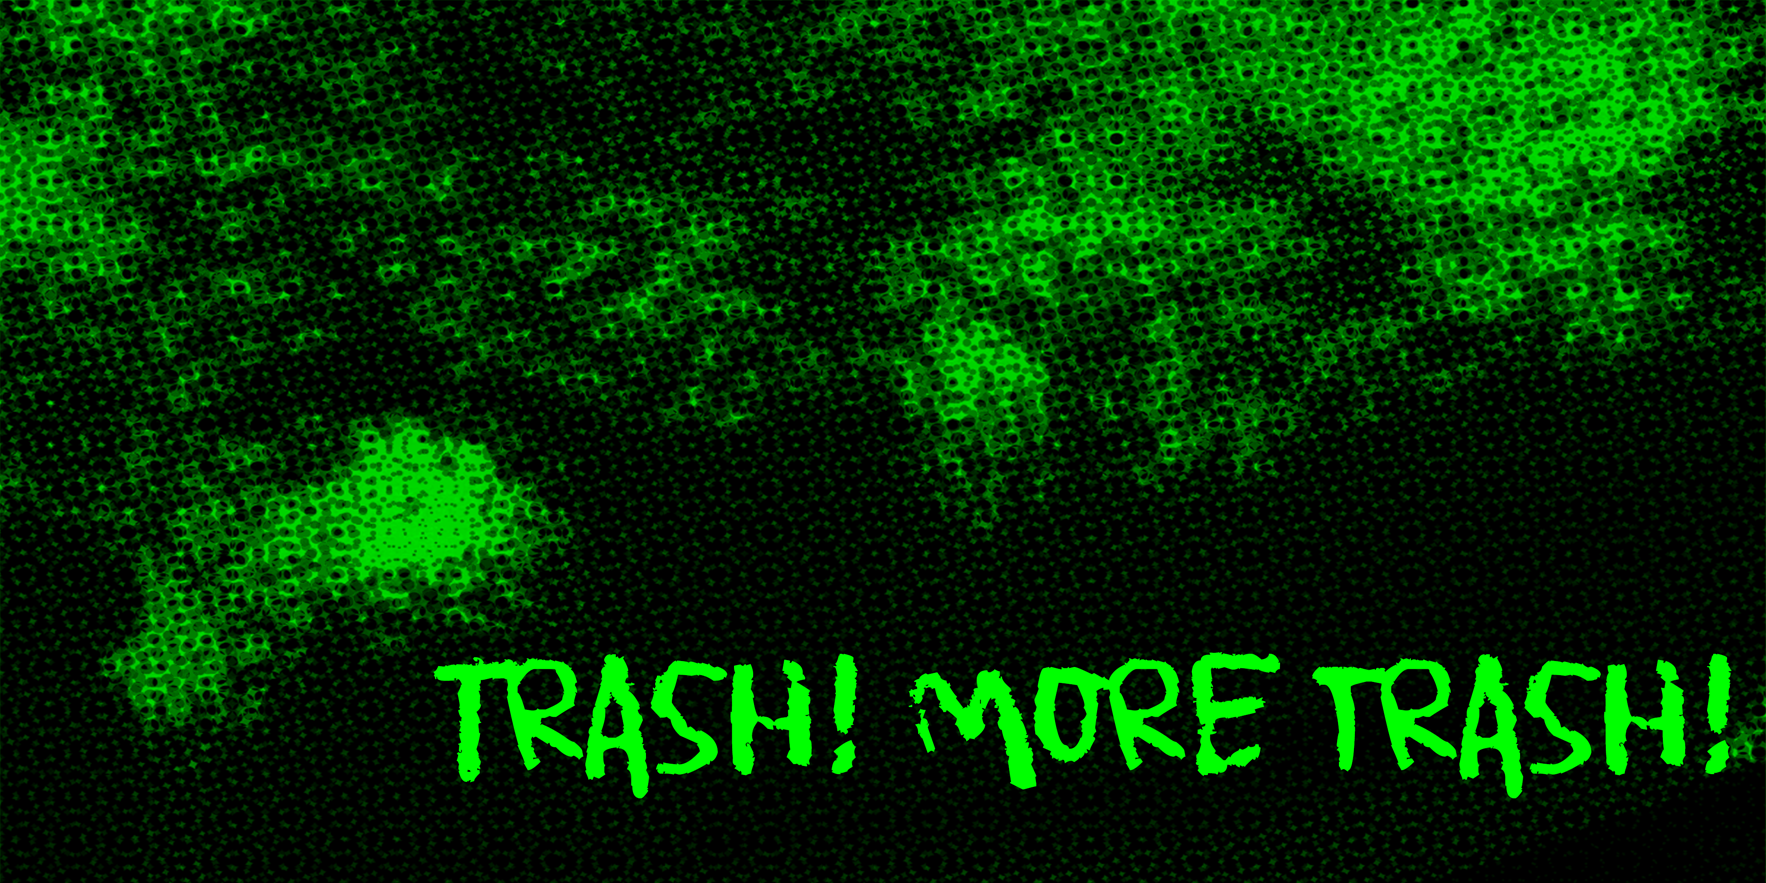 Trash! More Trash!